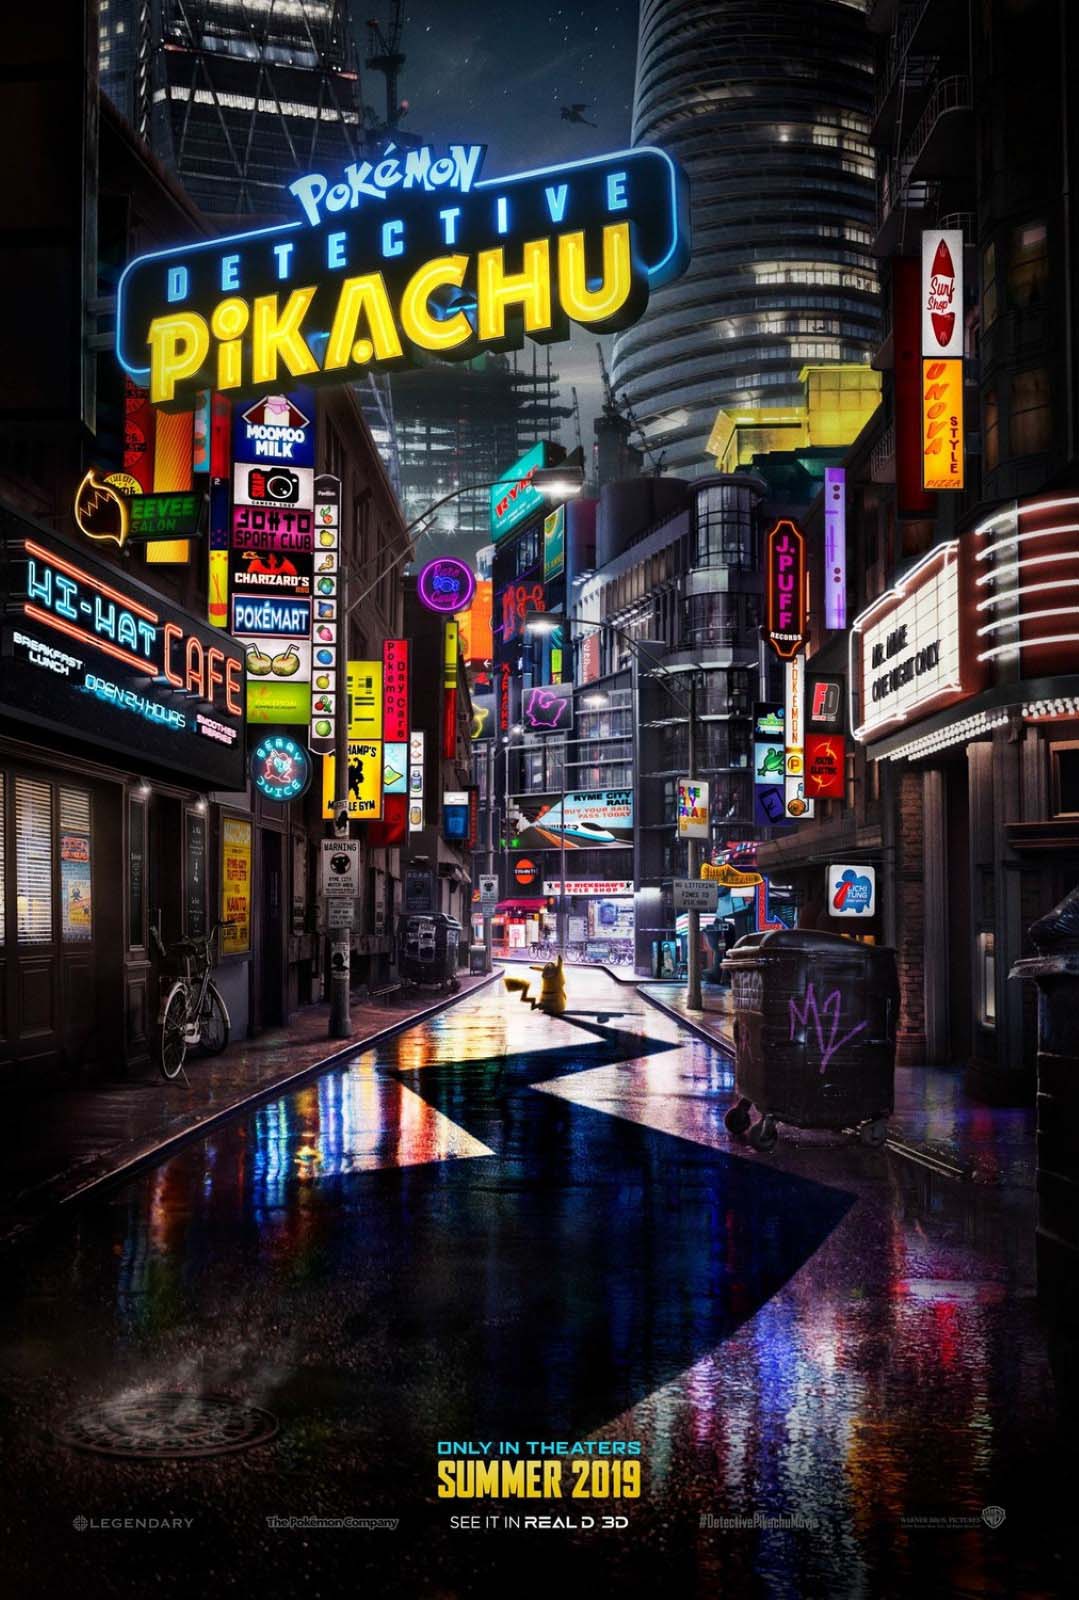 Pokémon Detective pikachu (2019) Movie poster Free Online